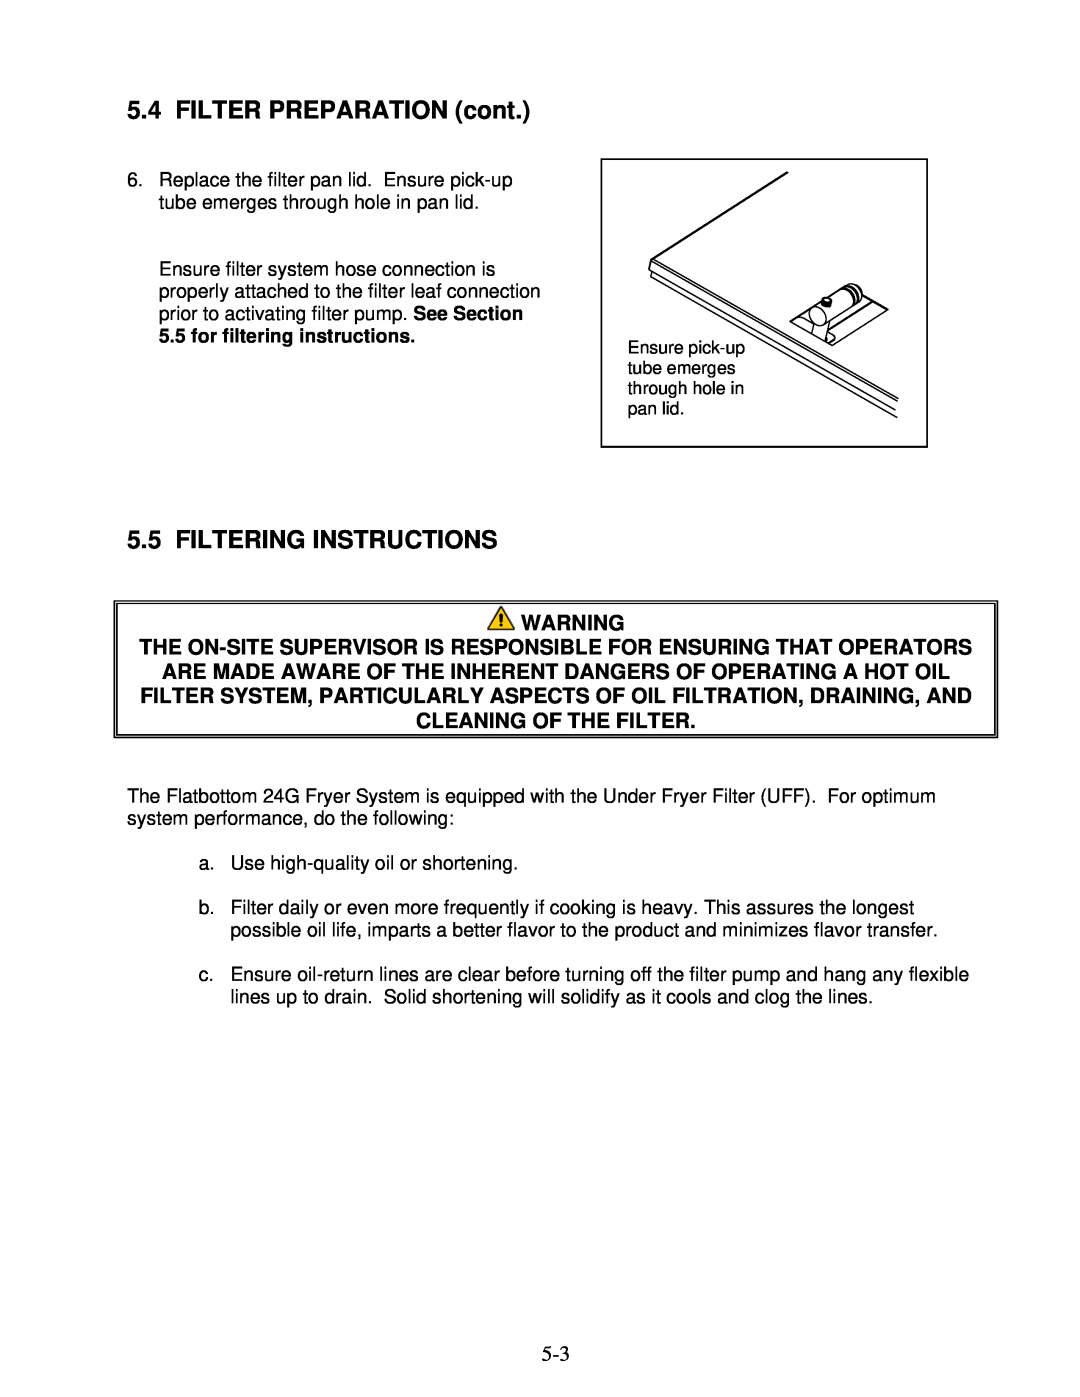 Frymaster YSCFC24 operation manual FILTER PREPARATION cont, Filtering Instructions 